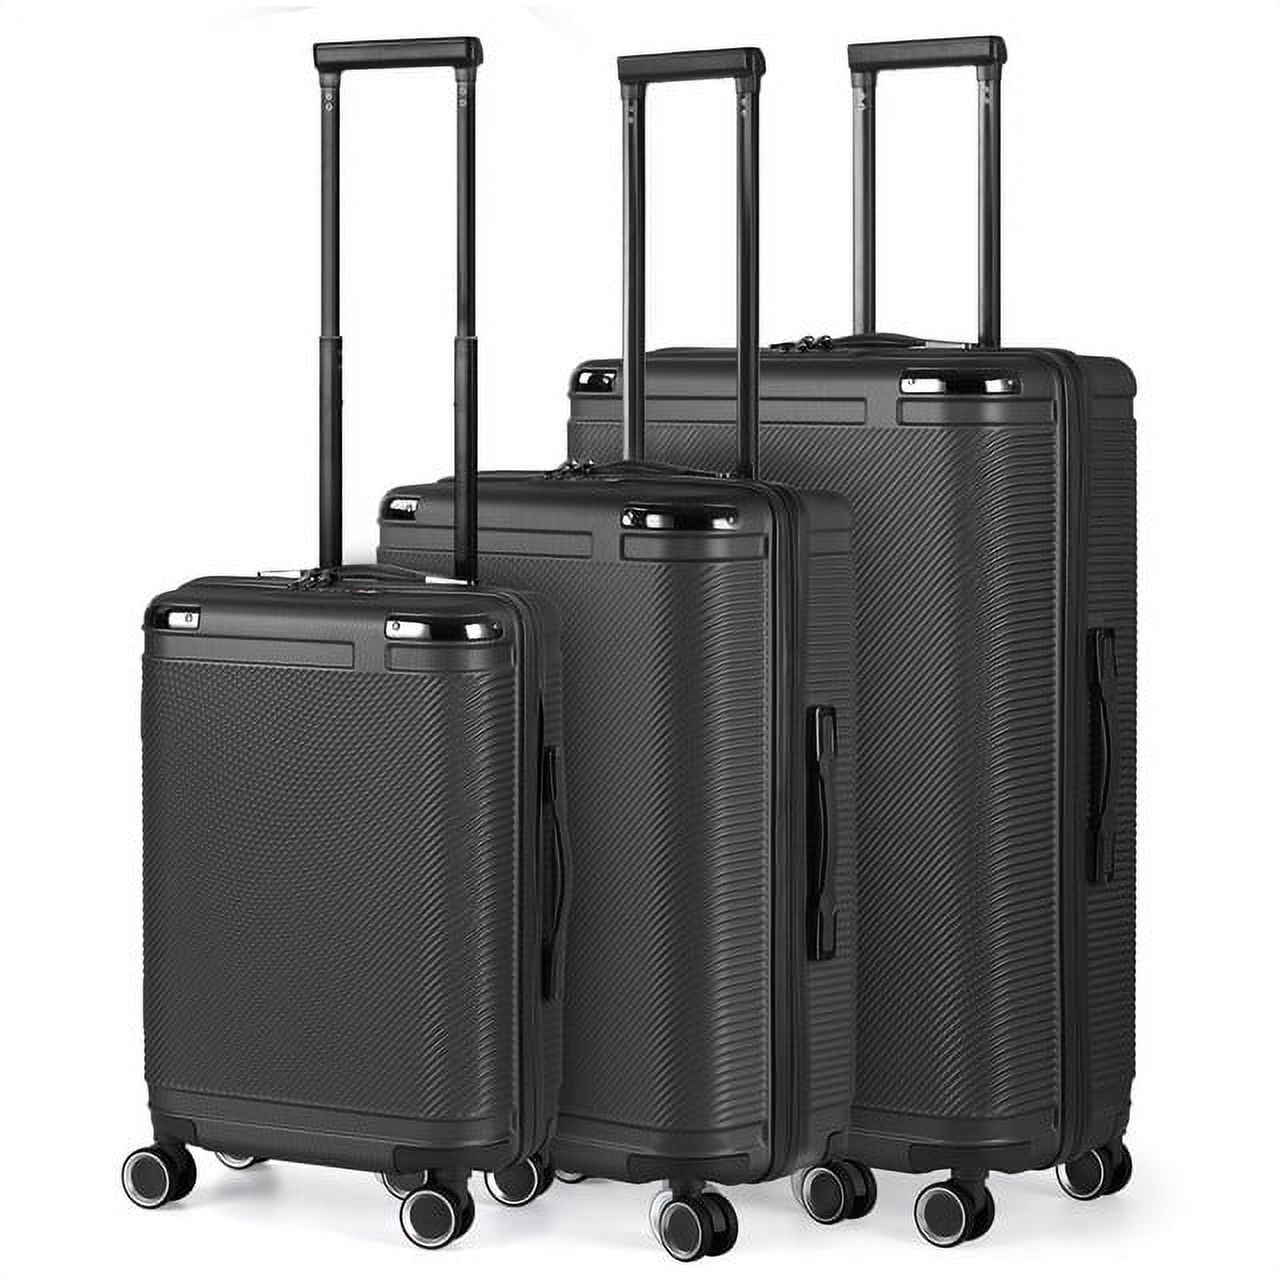 Hikolayae Aden Collection Hardside Spinner Luggage Sets in Beige, 3 Piece -  TSA Lock 